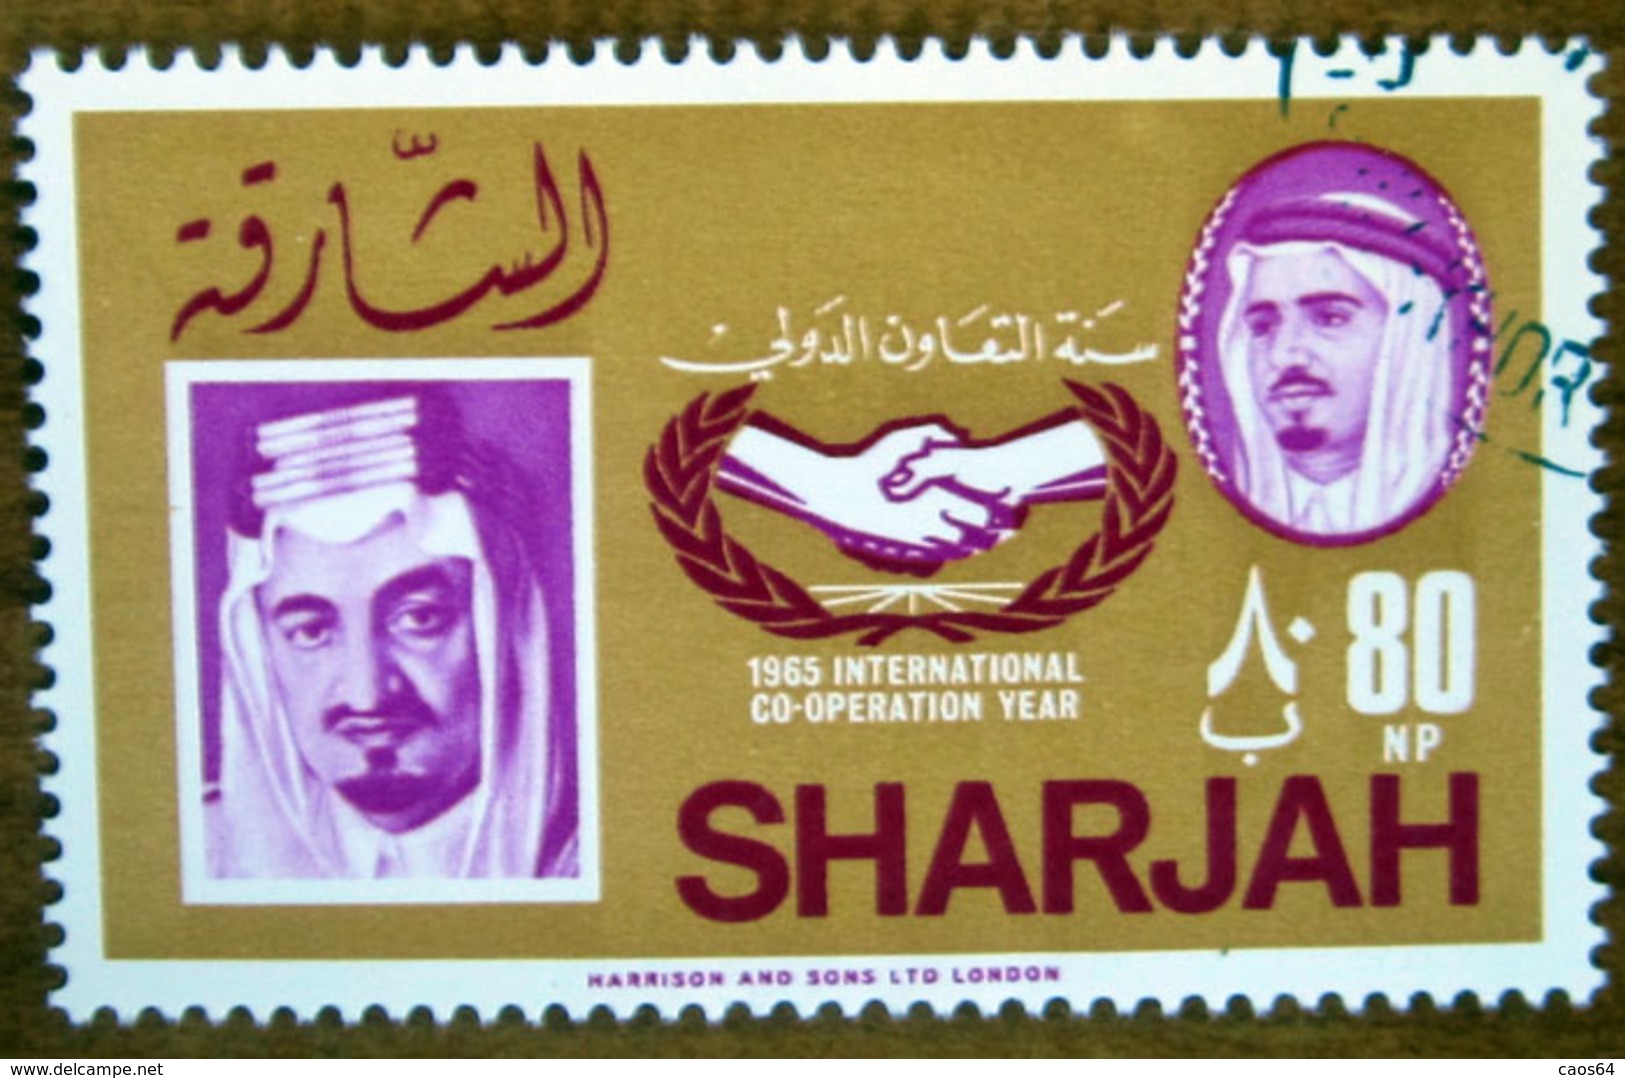 1966 SHARJAH King Faisal Bin Abdulaziz Al Saud, Saudi Arabia 80np - Usato - Sharjah